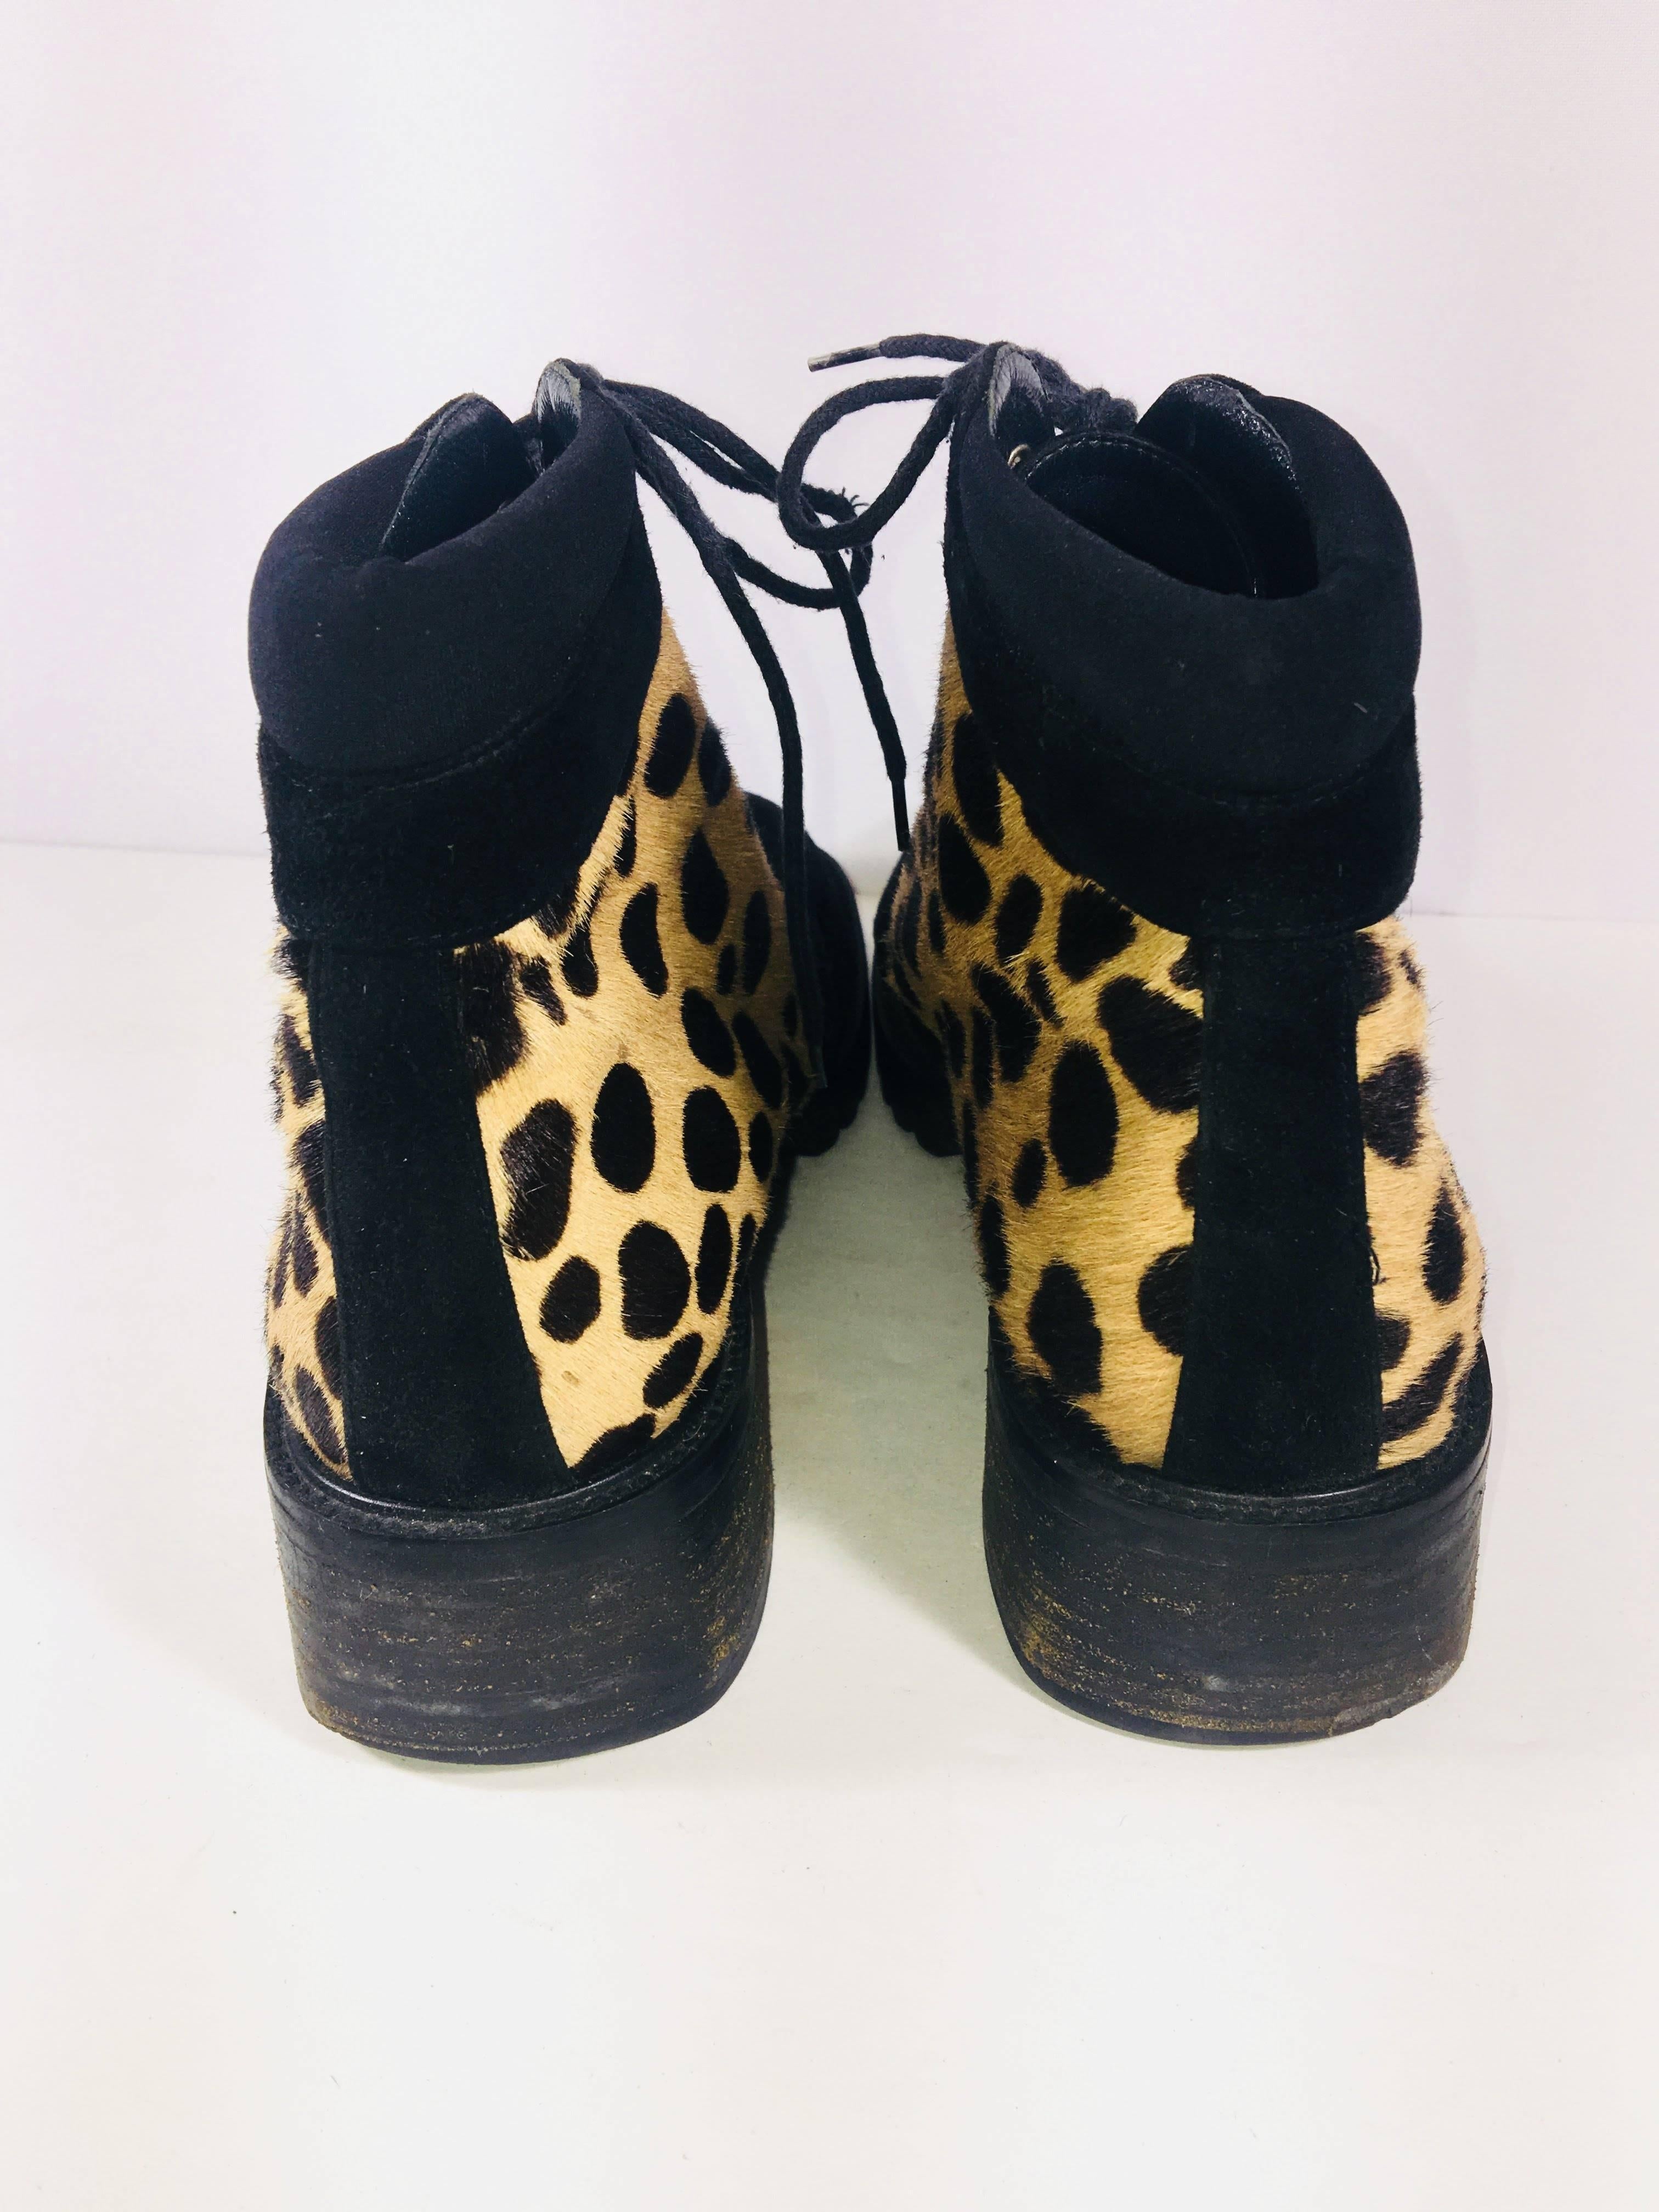 cheetah print boots